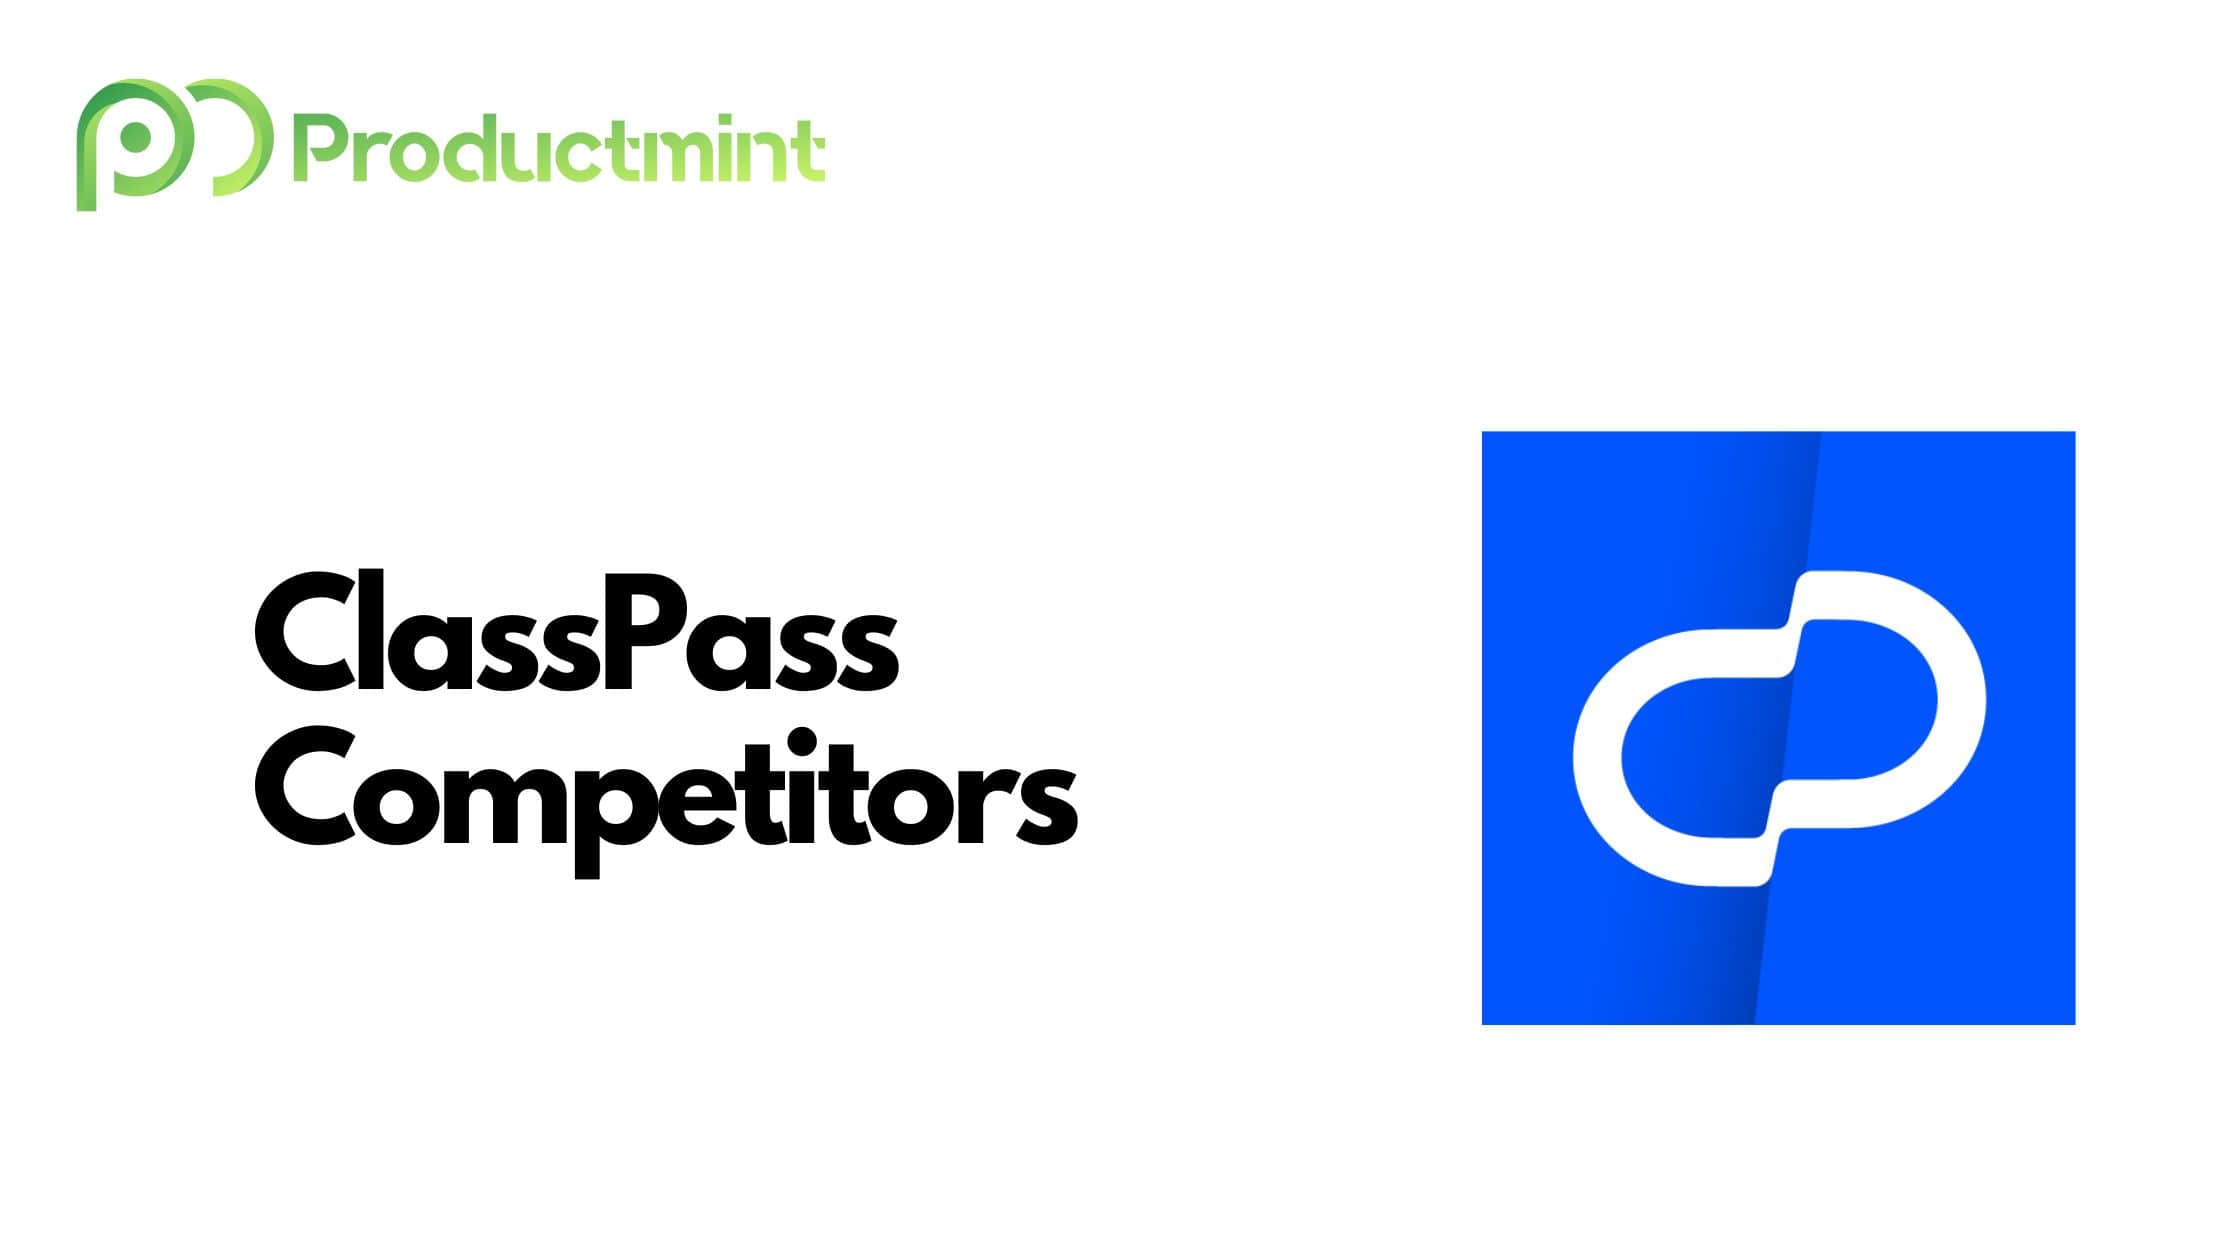 ClassPass Competitors